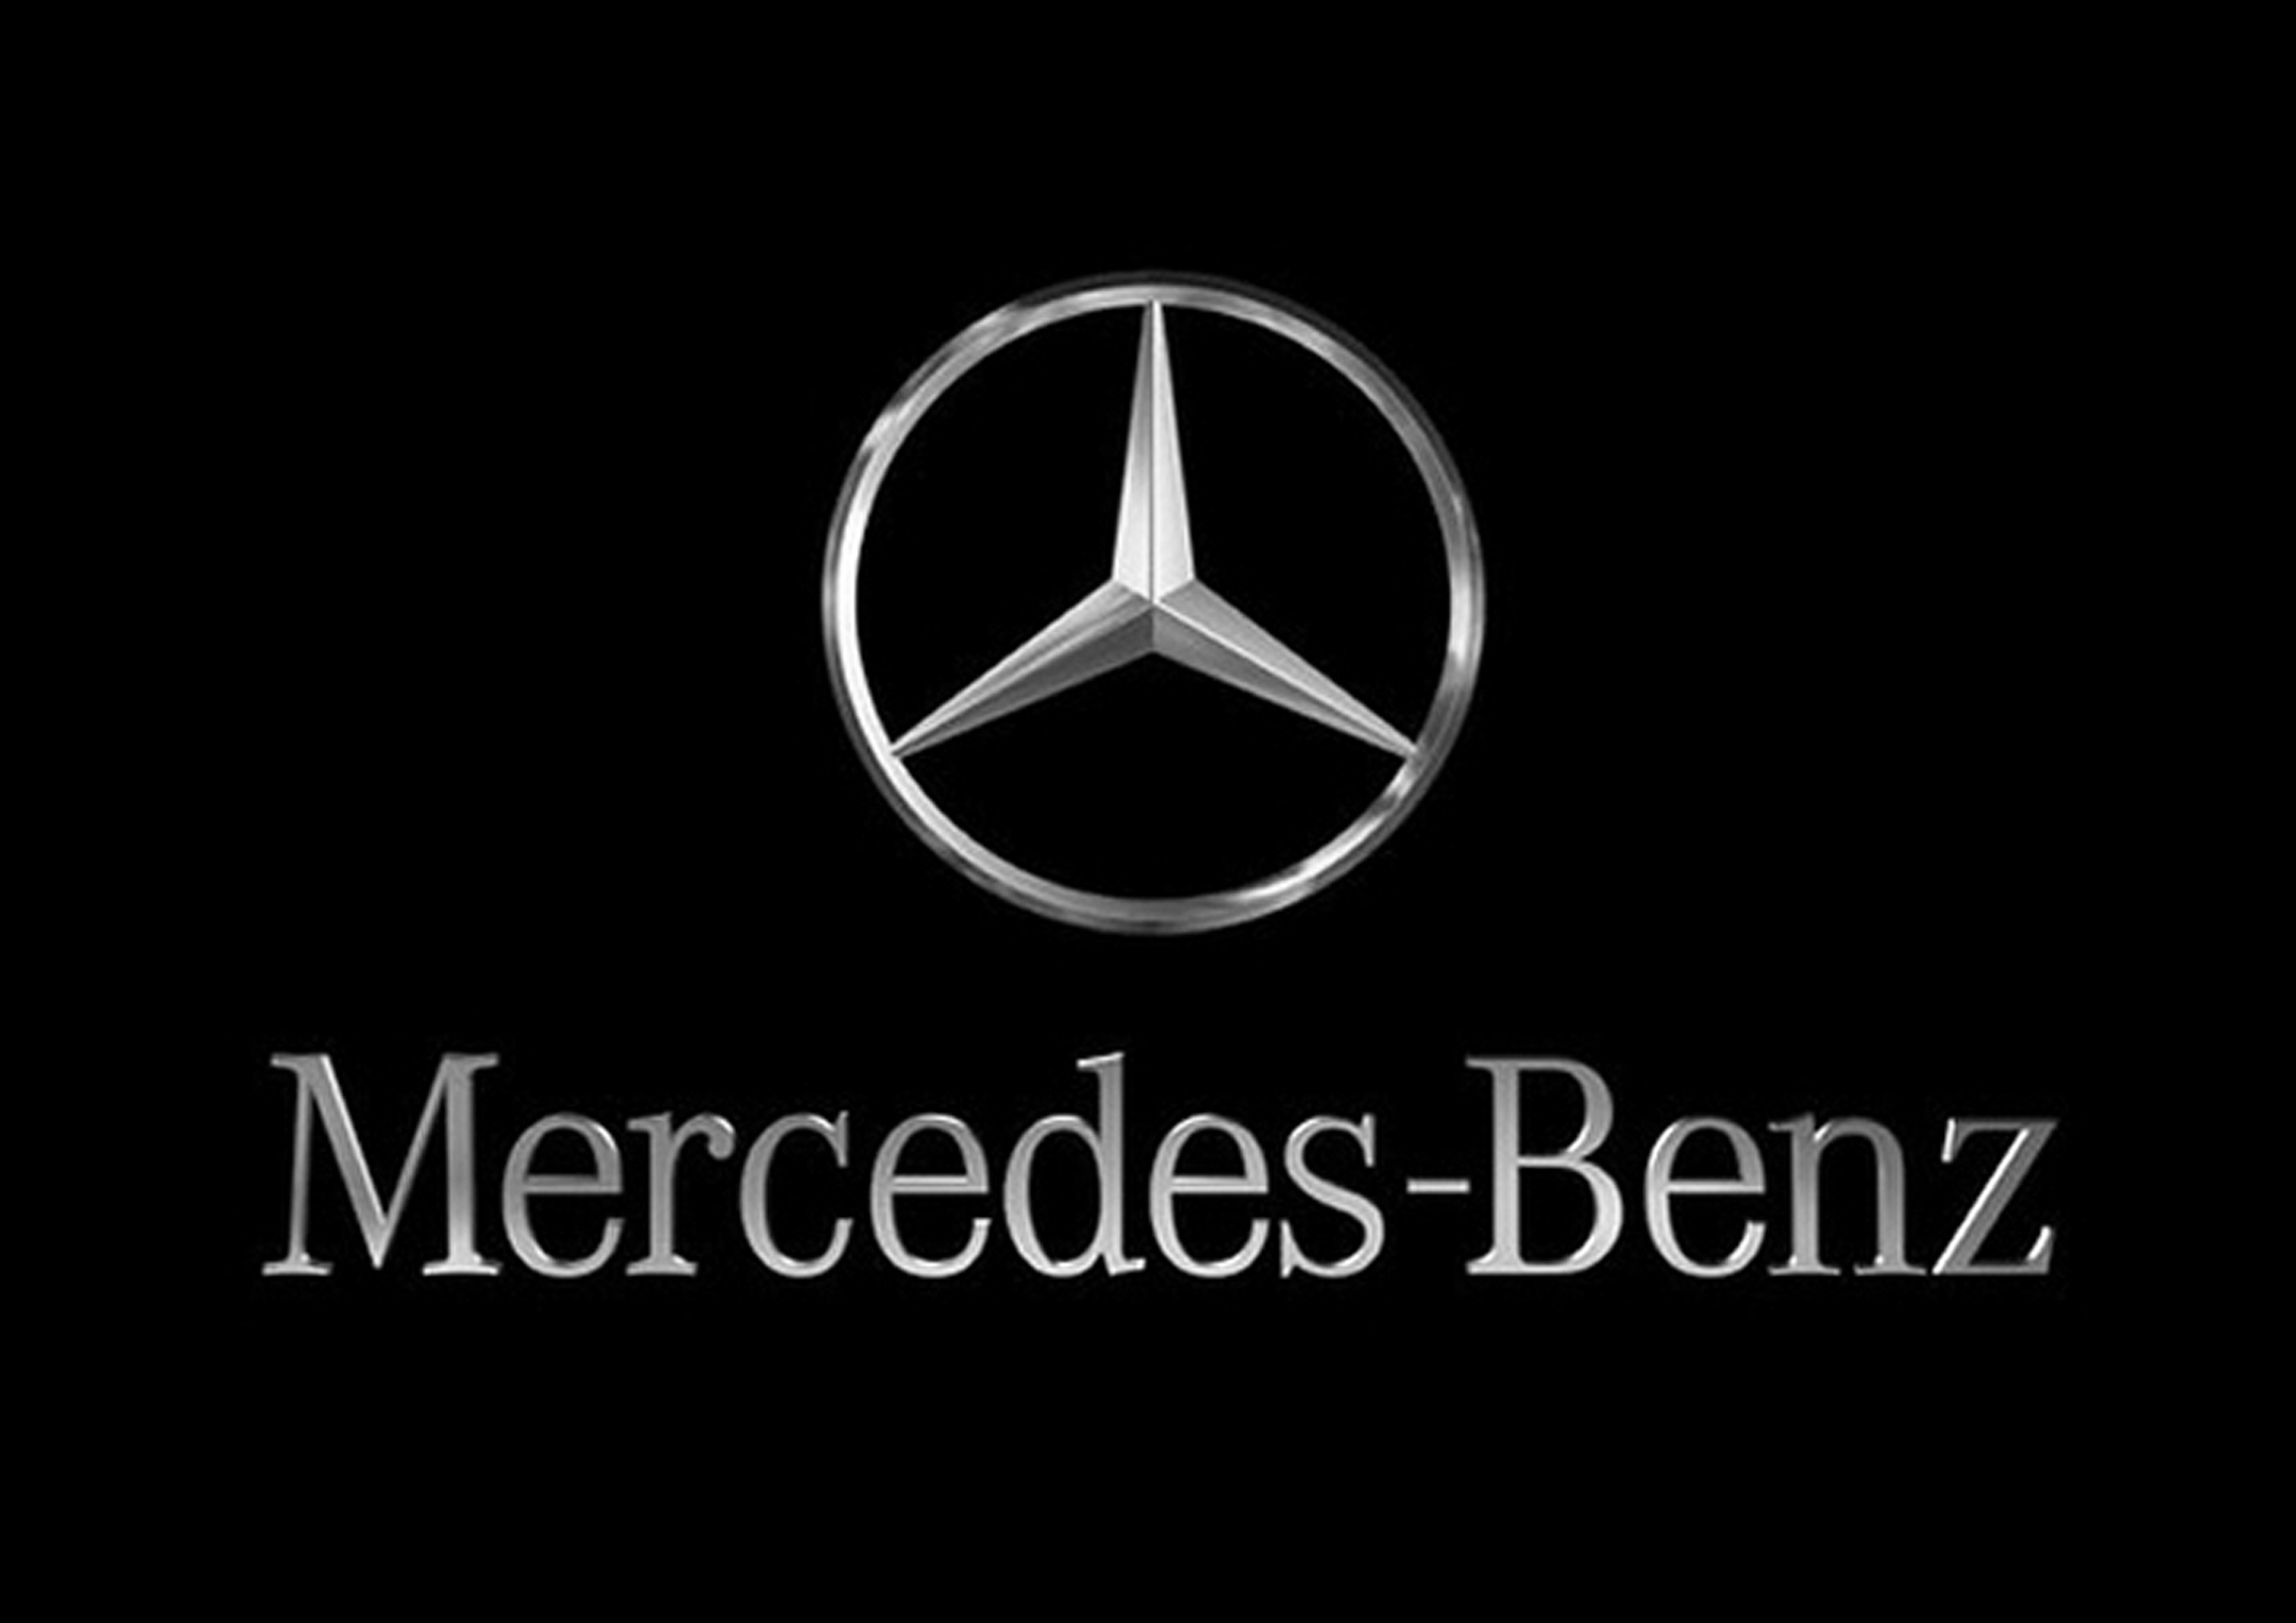 Mercedes_logo-2.jpg